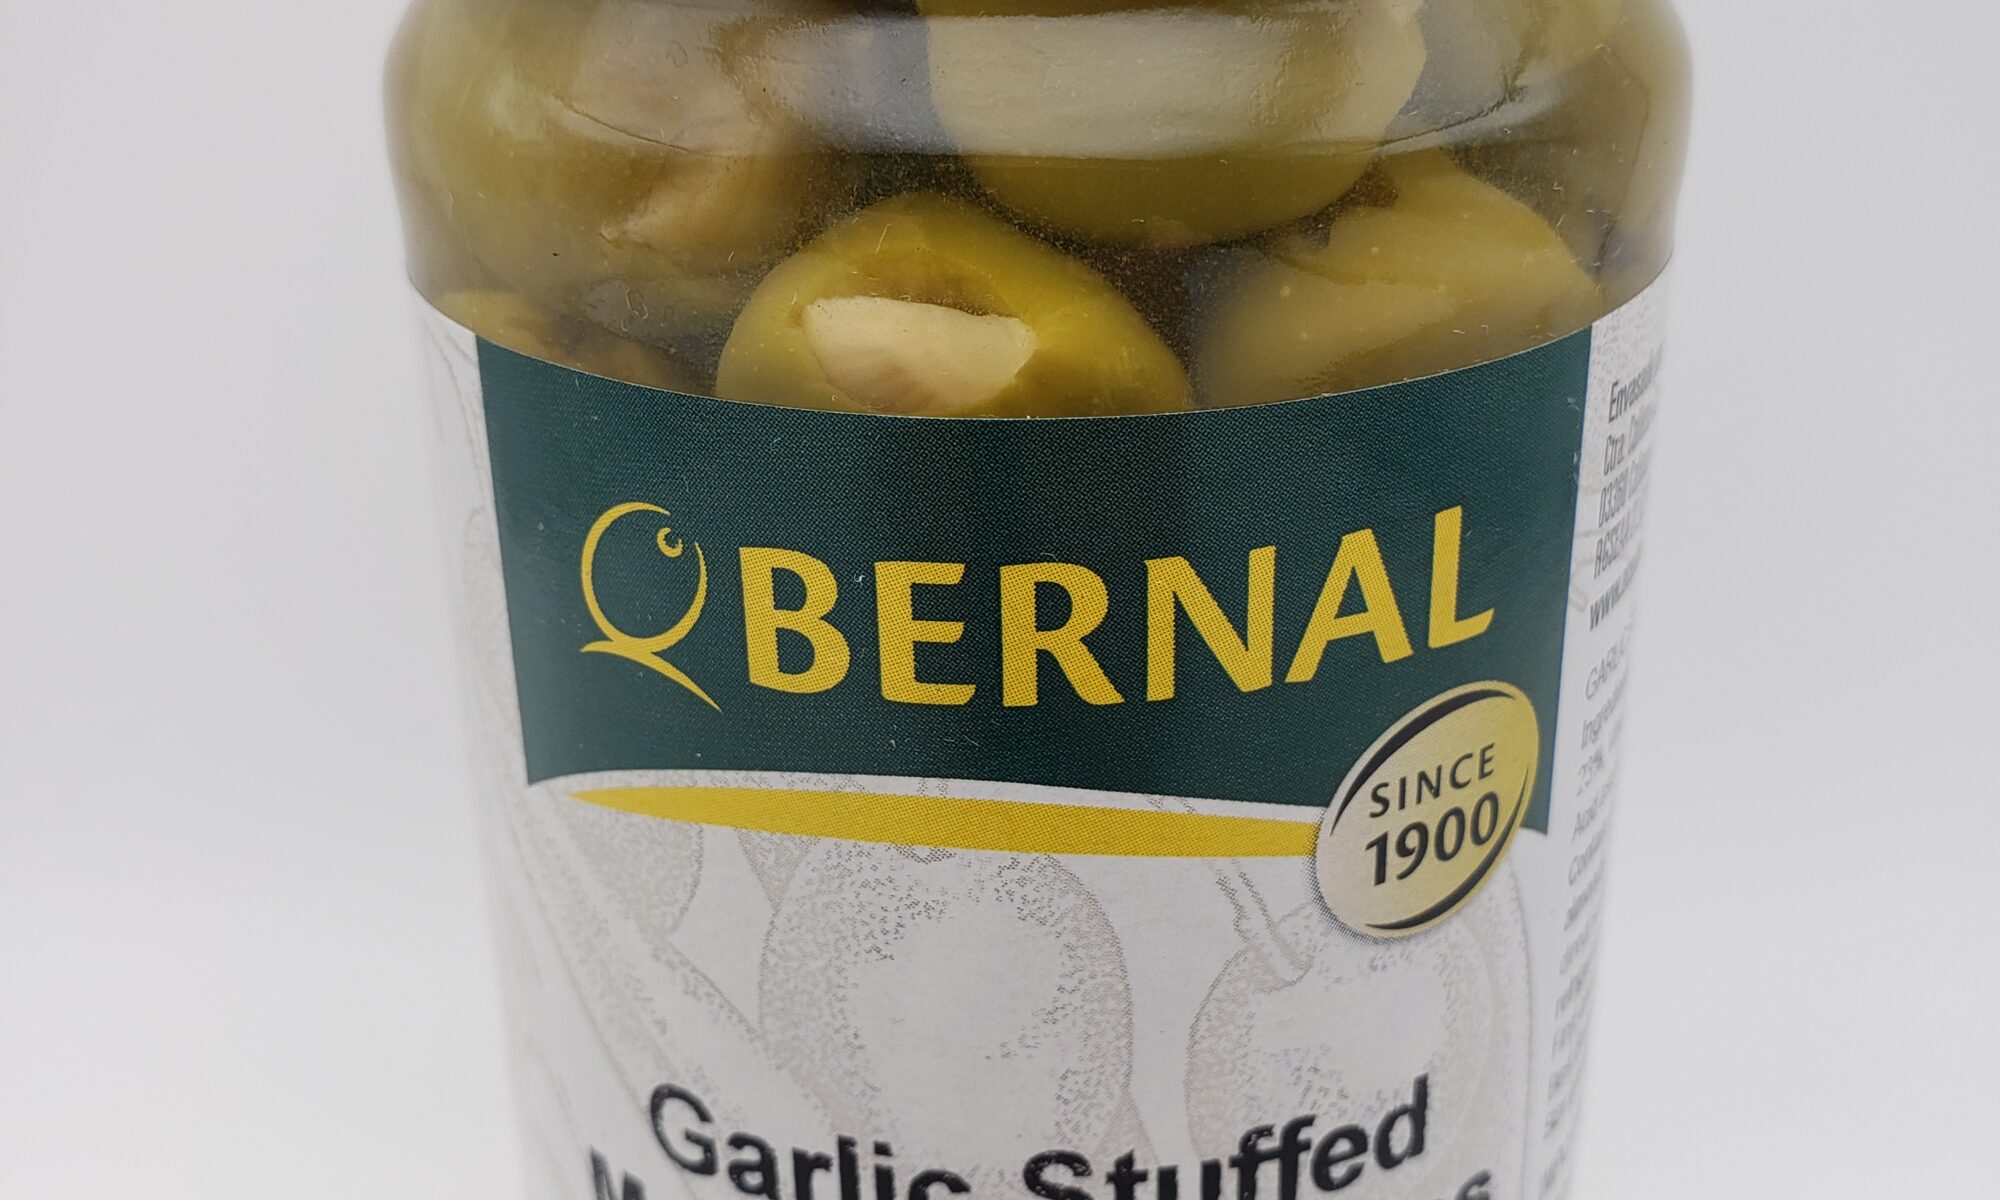 Image of Bernal garlic stuffed olives